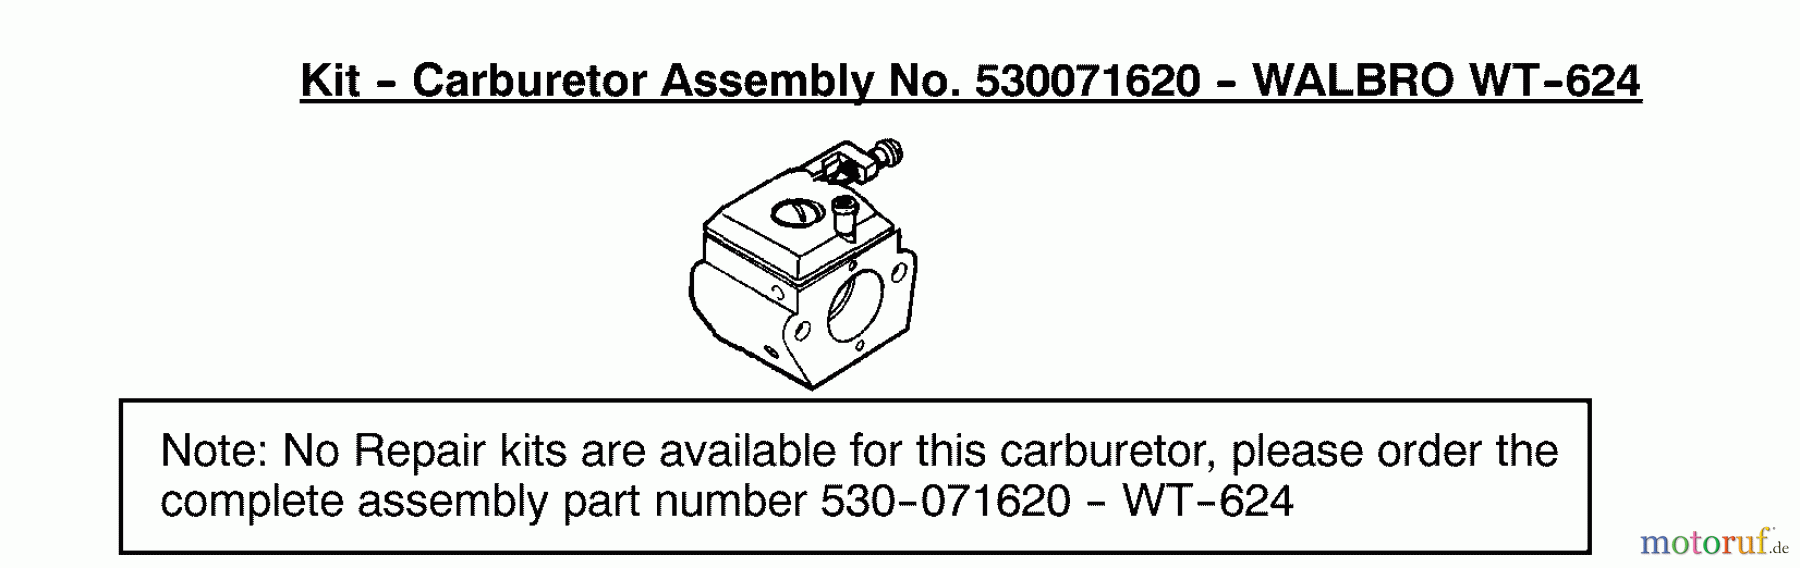  Poulan / Weed Eater Motorsägen 2075 (Type 5) - Poulan Chainsaw Carburetor Assembly (Walbro WT624) P/N 530071620